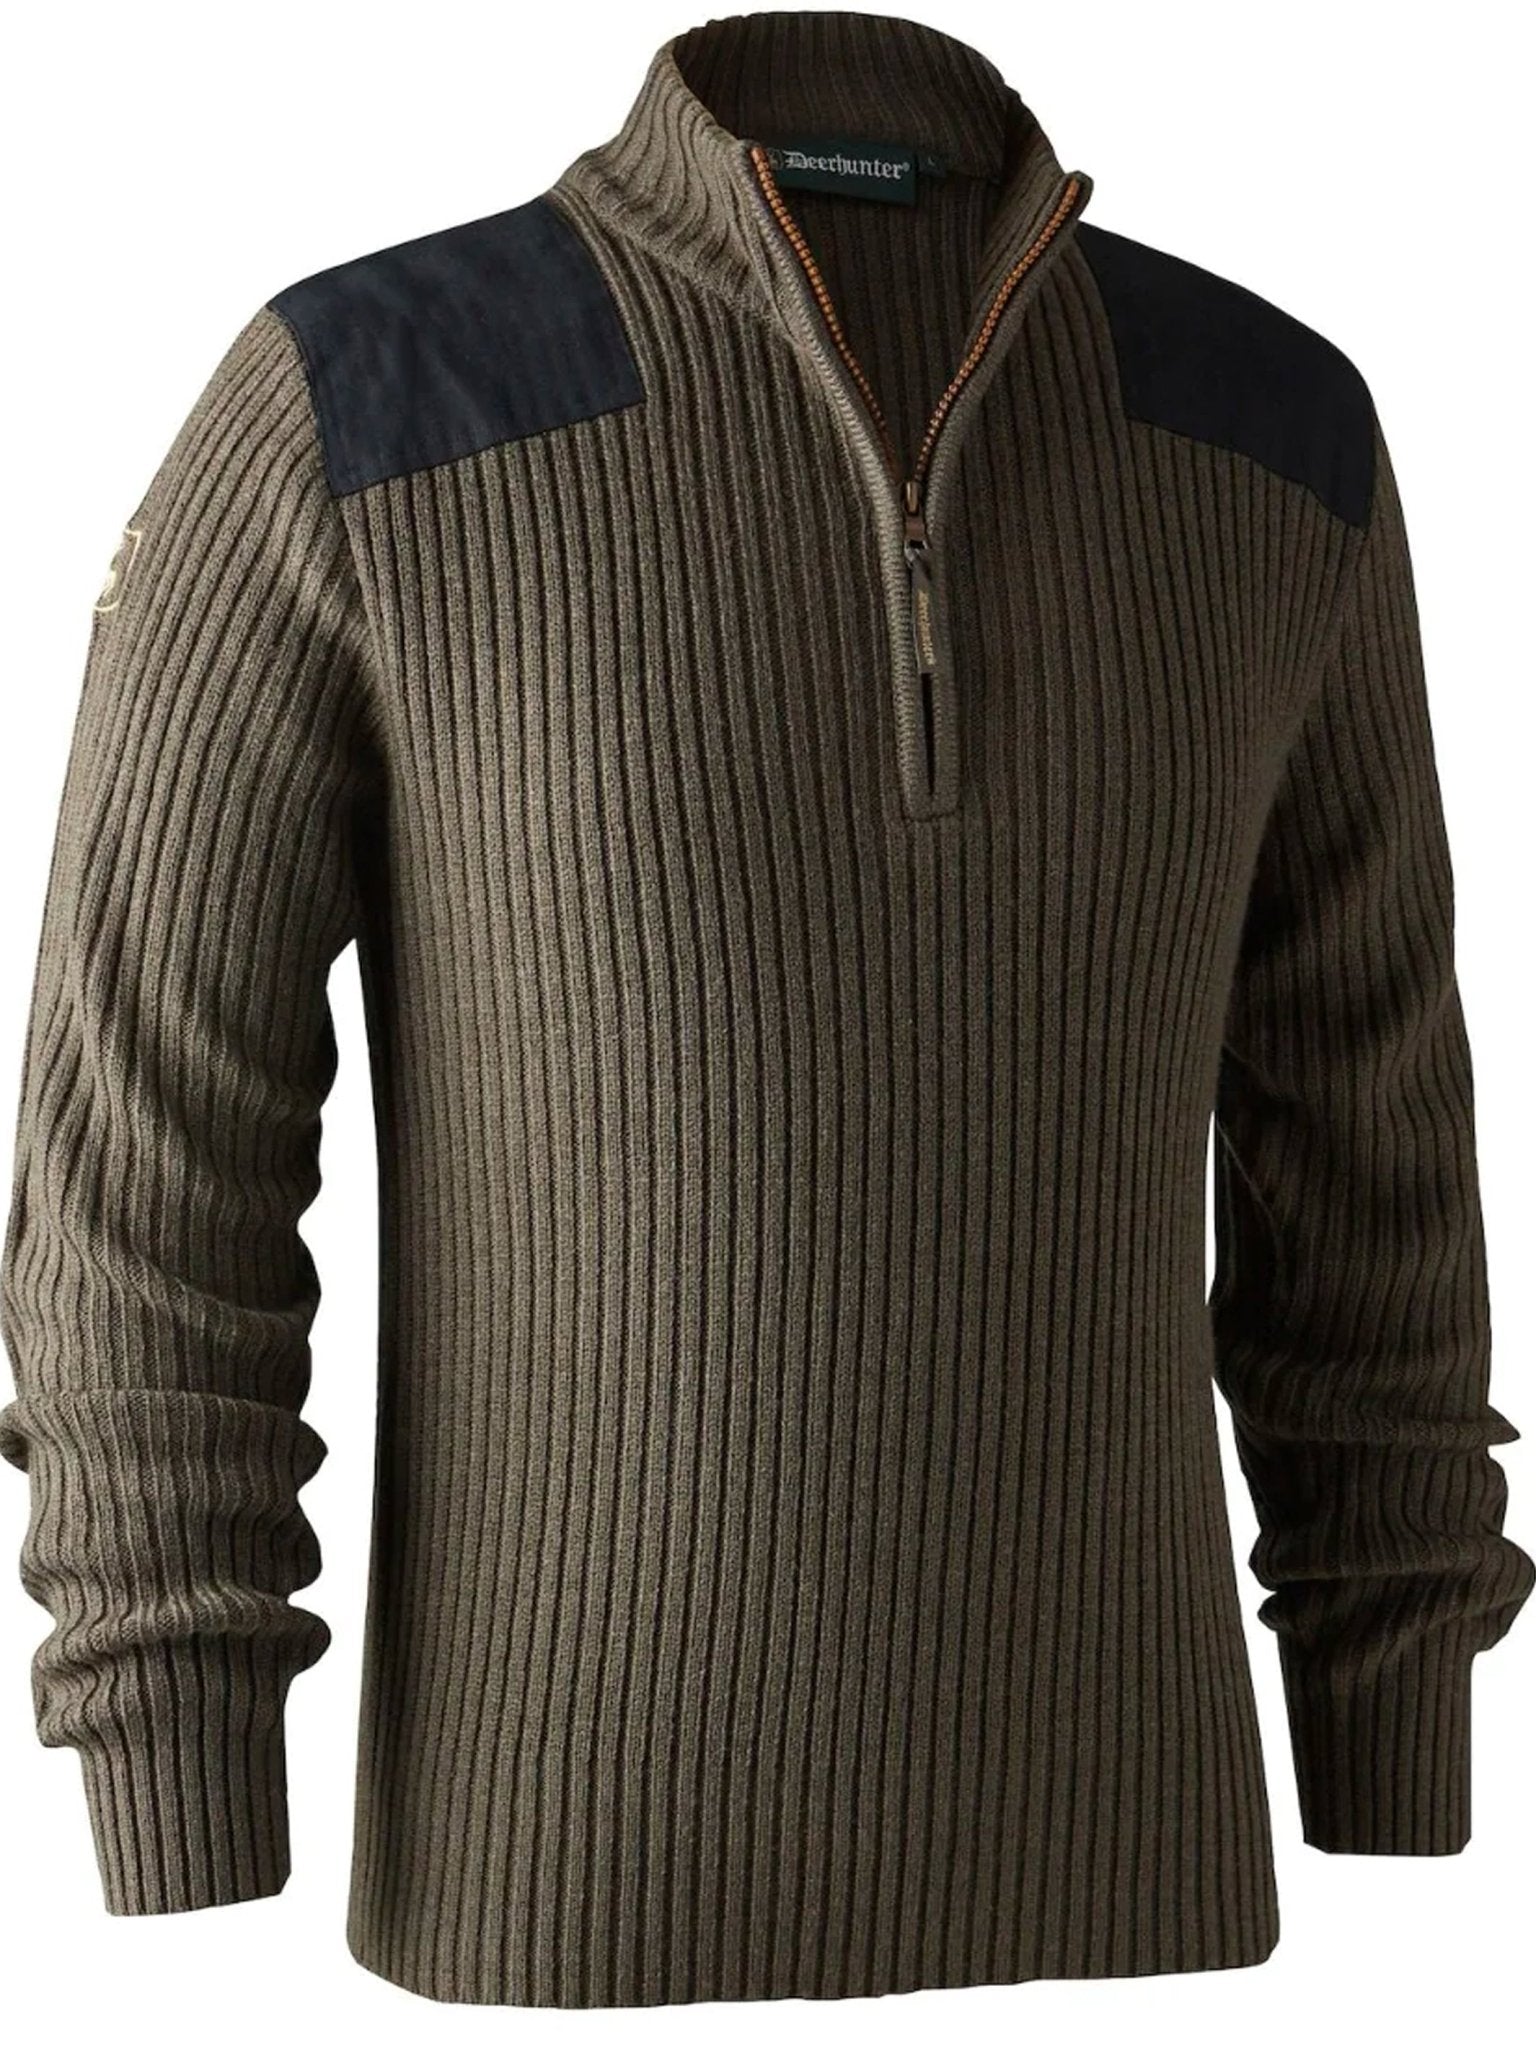 4elementsclothingDeerhunterDeerhunter - Rogaland knit pullover / jumper with quarter ZipKnitwear8726-572-S